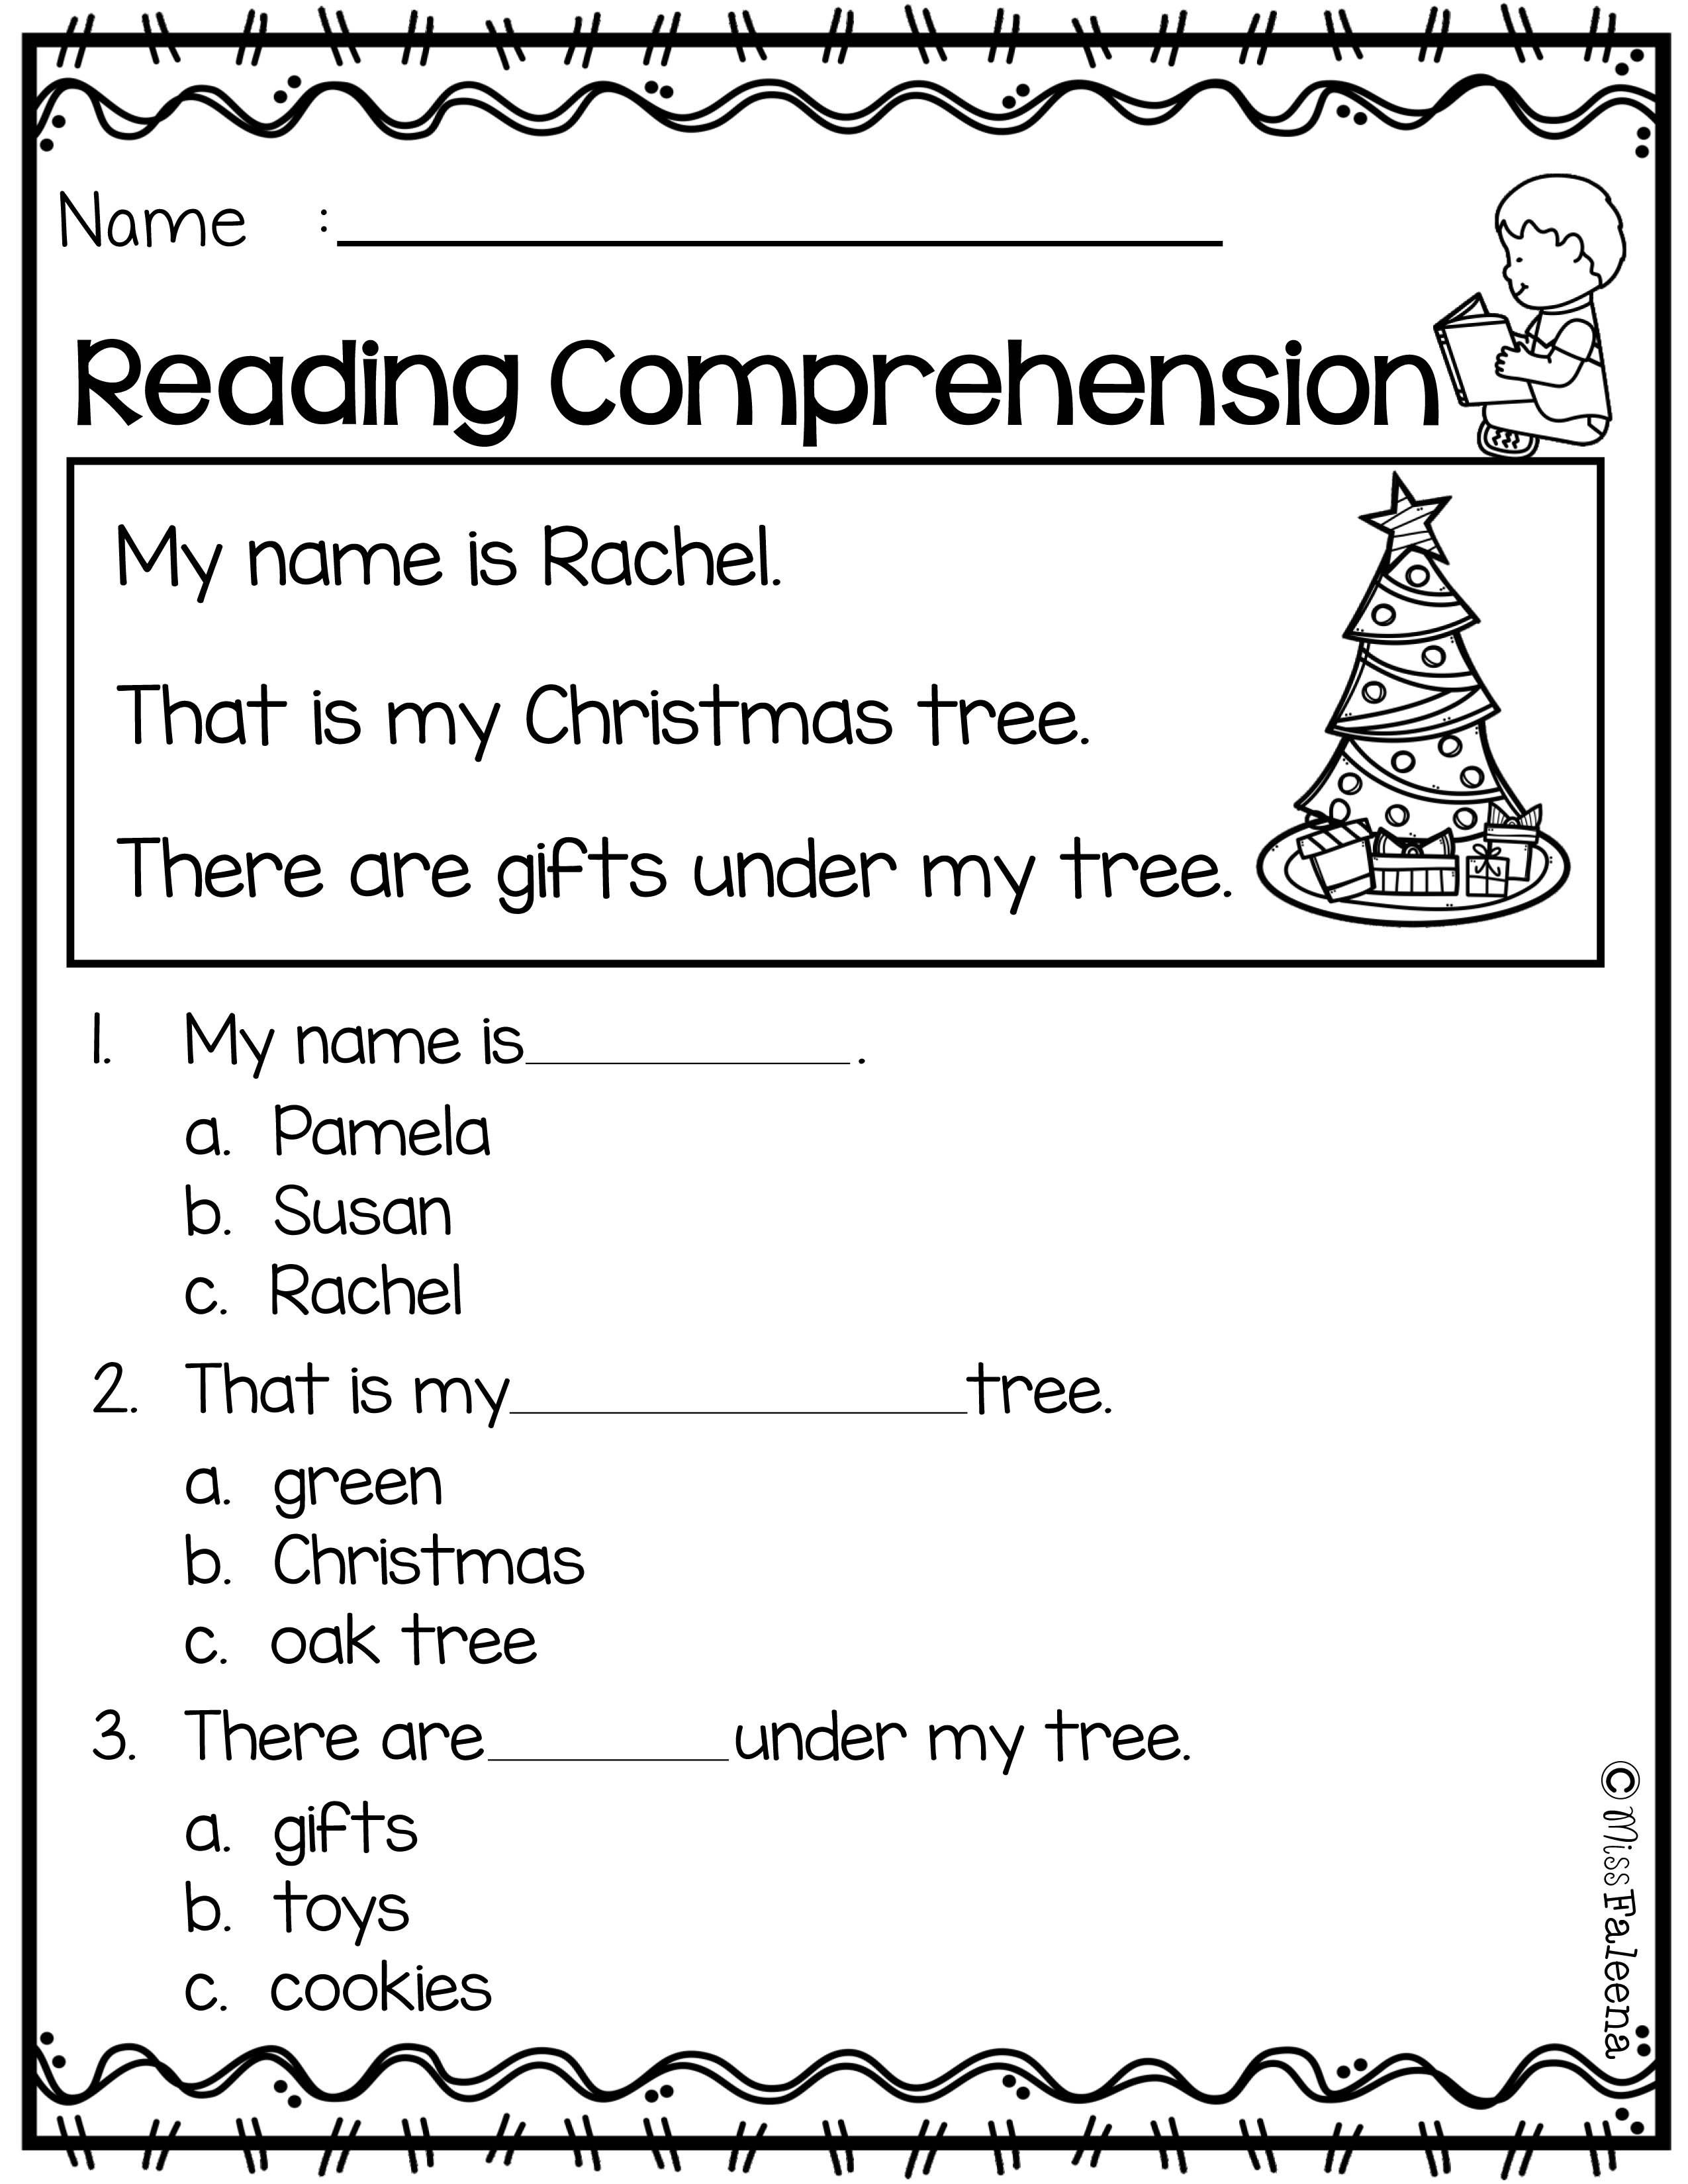 Preschool Reading Comprehension Worksheets Free Reading Prehension